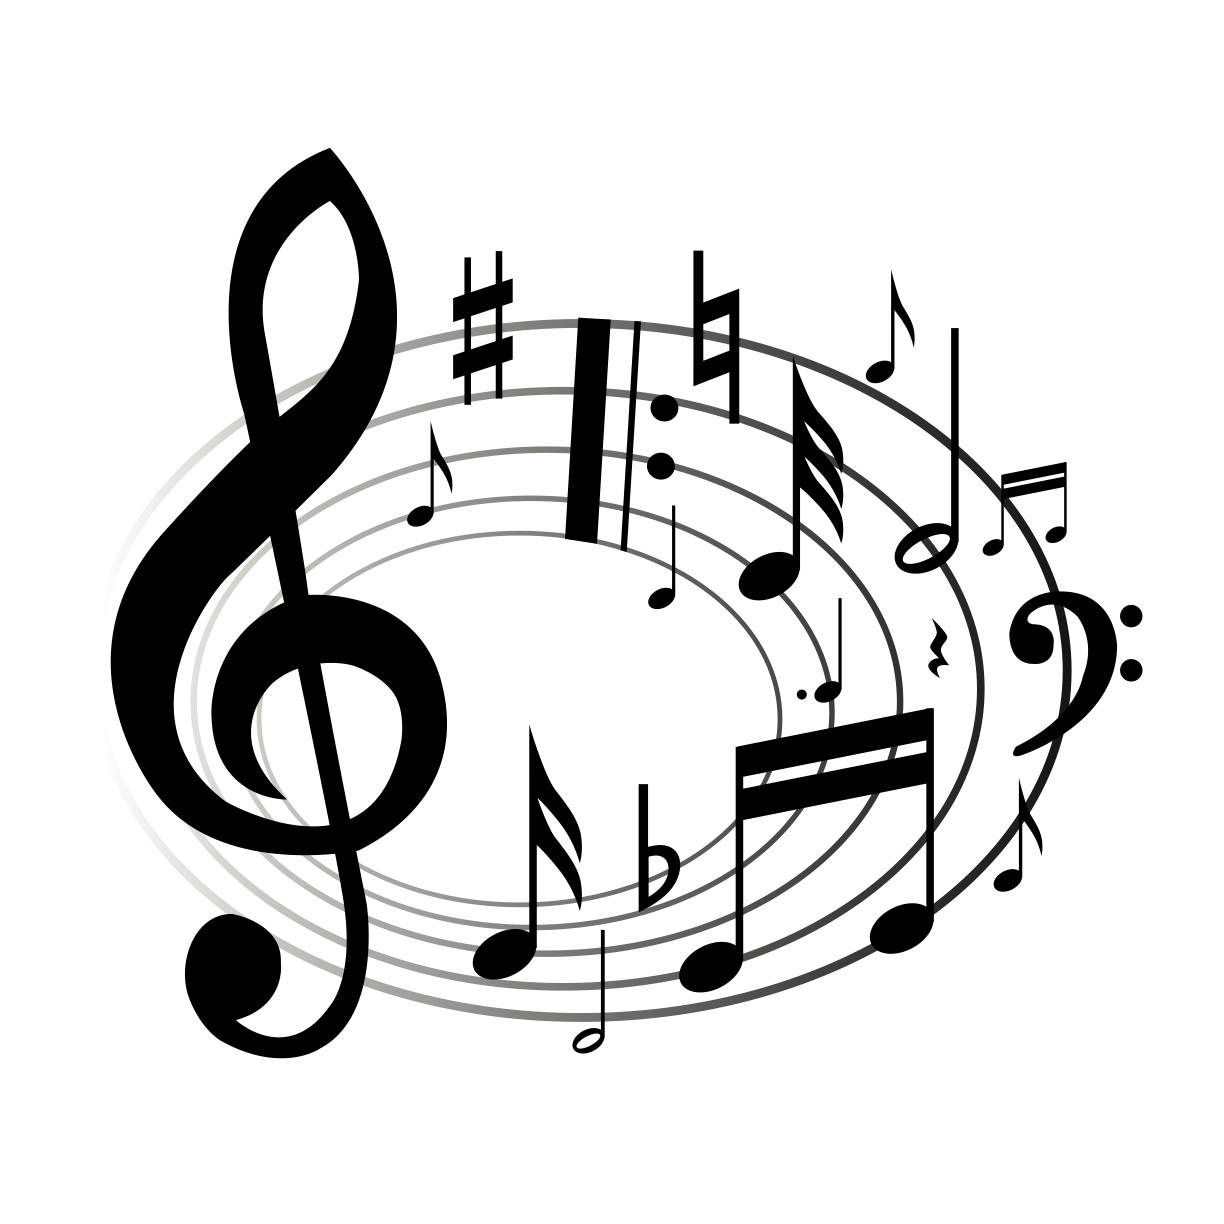 Music symbols in a circle